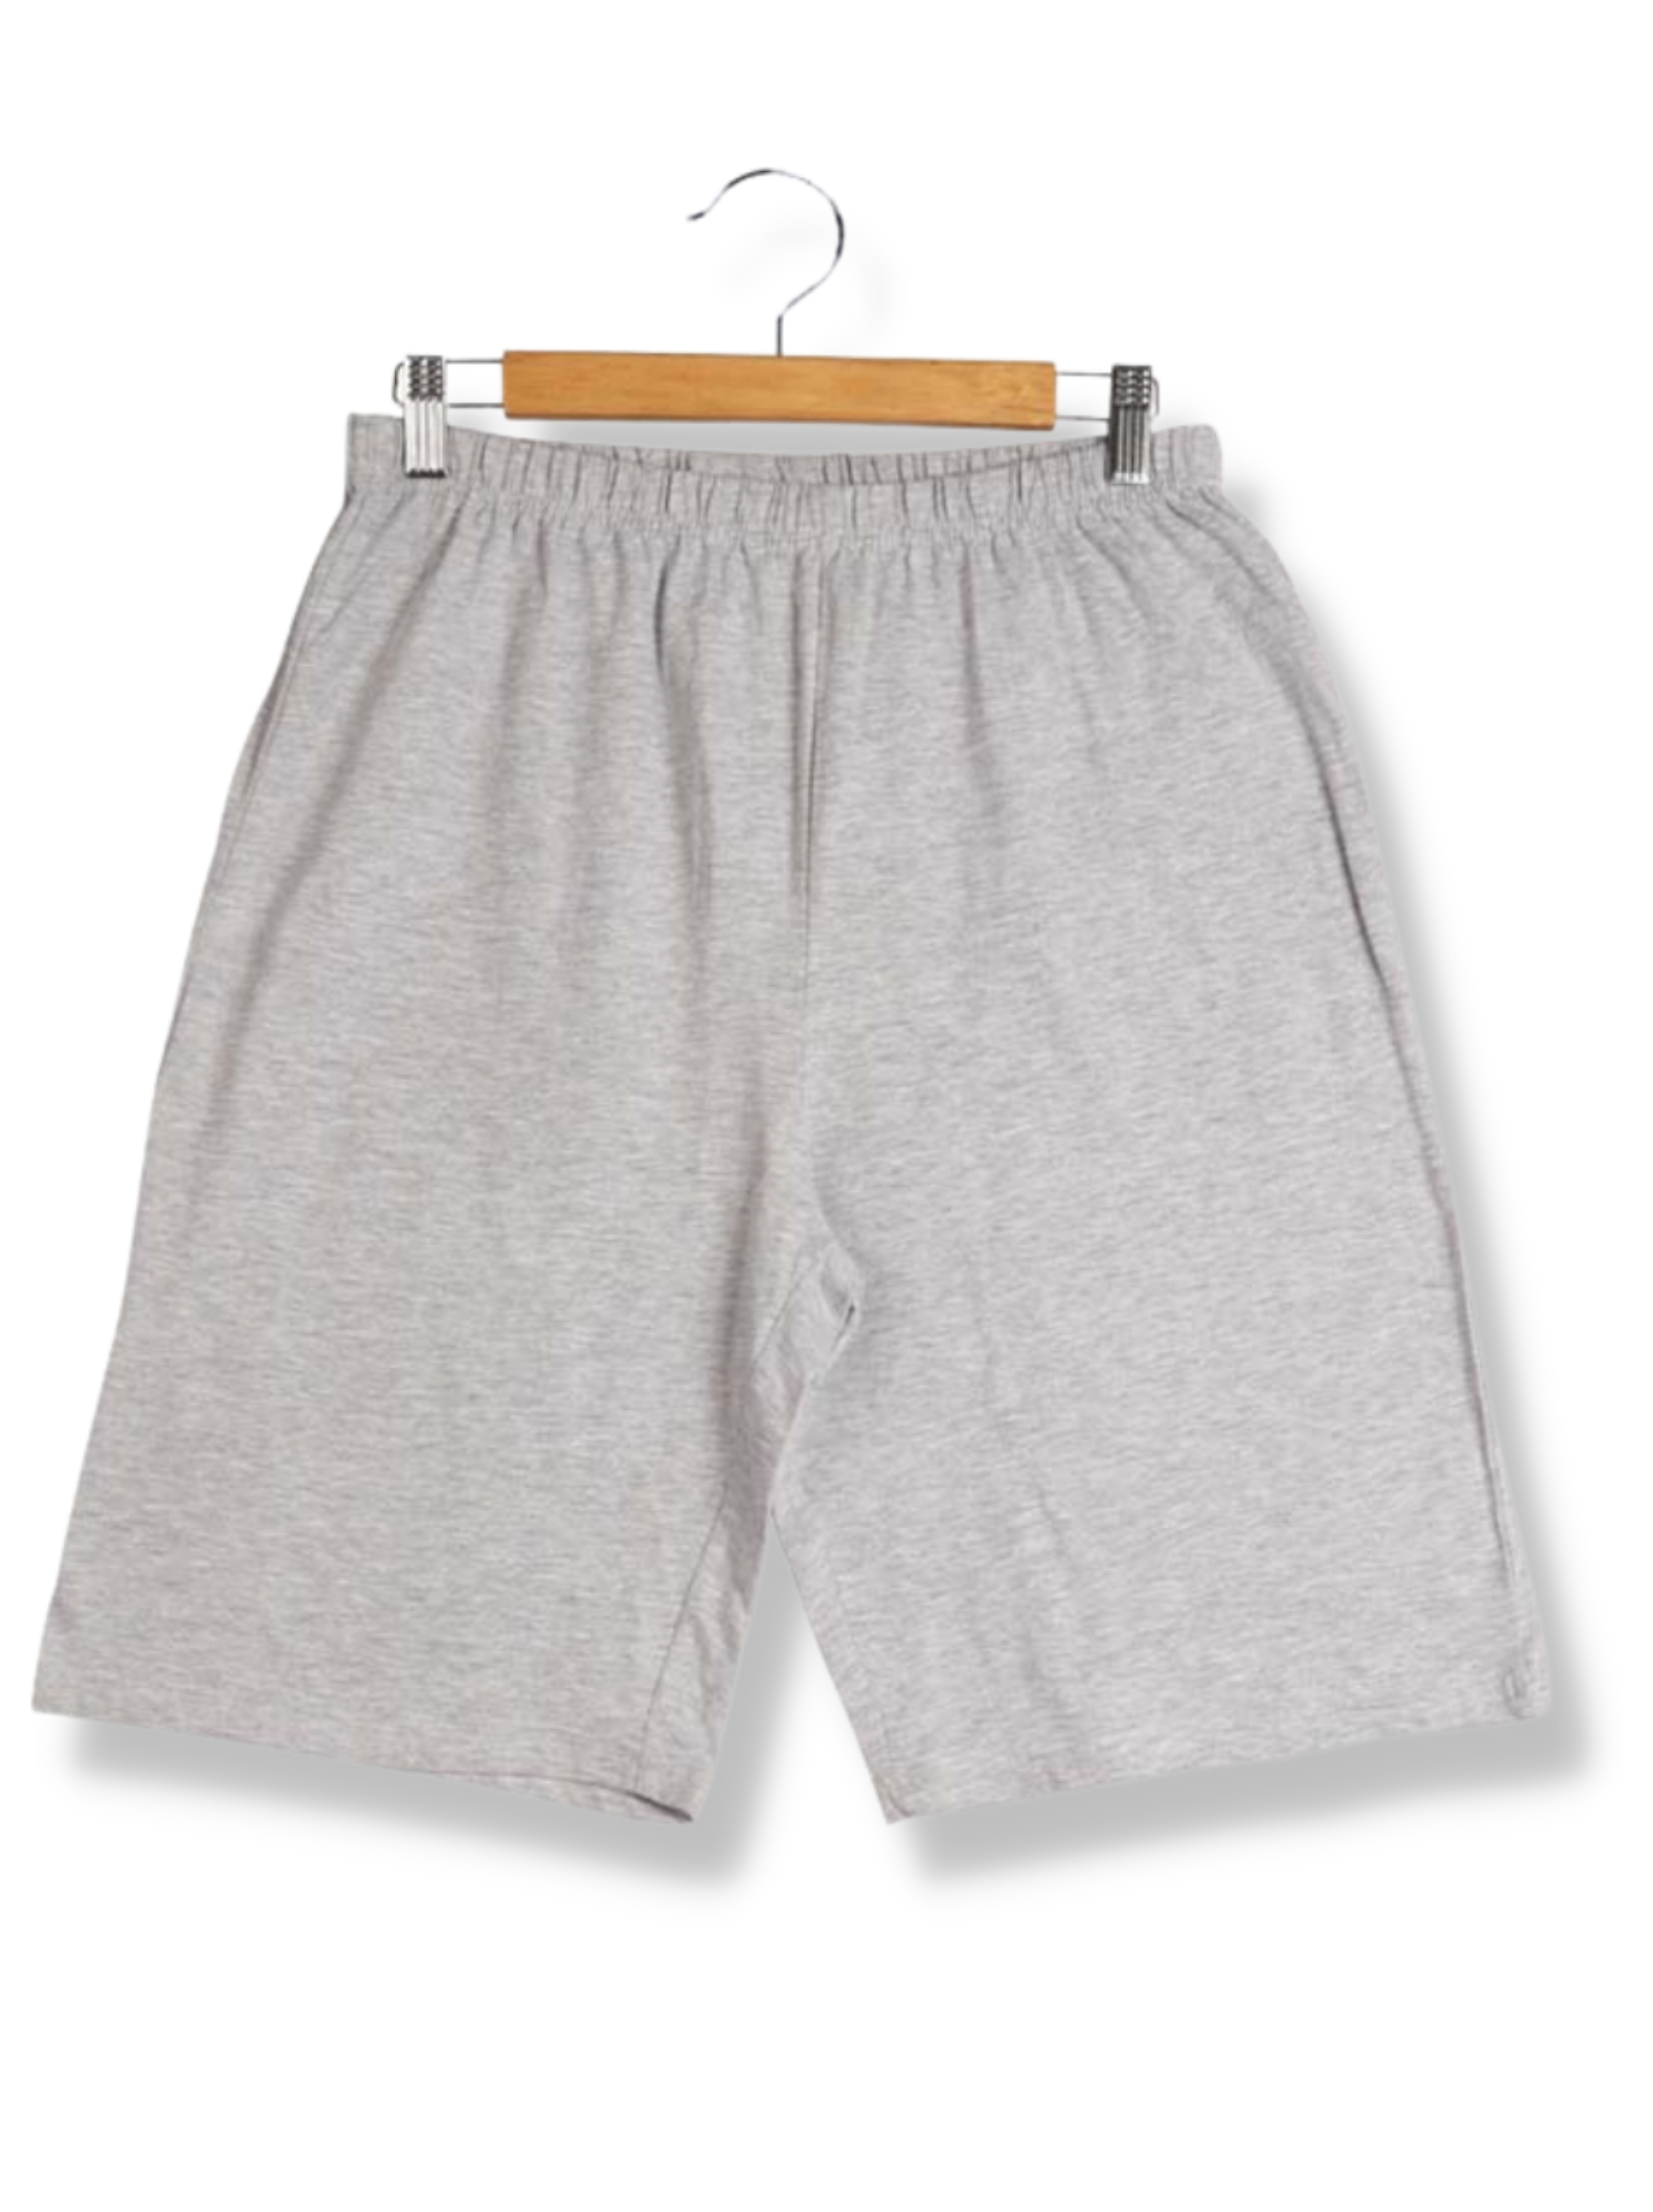 Mens Grey Solid Single Jersey Shorts